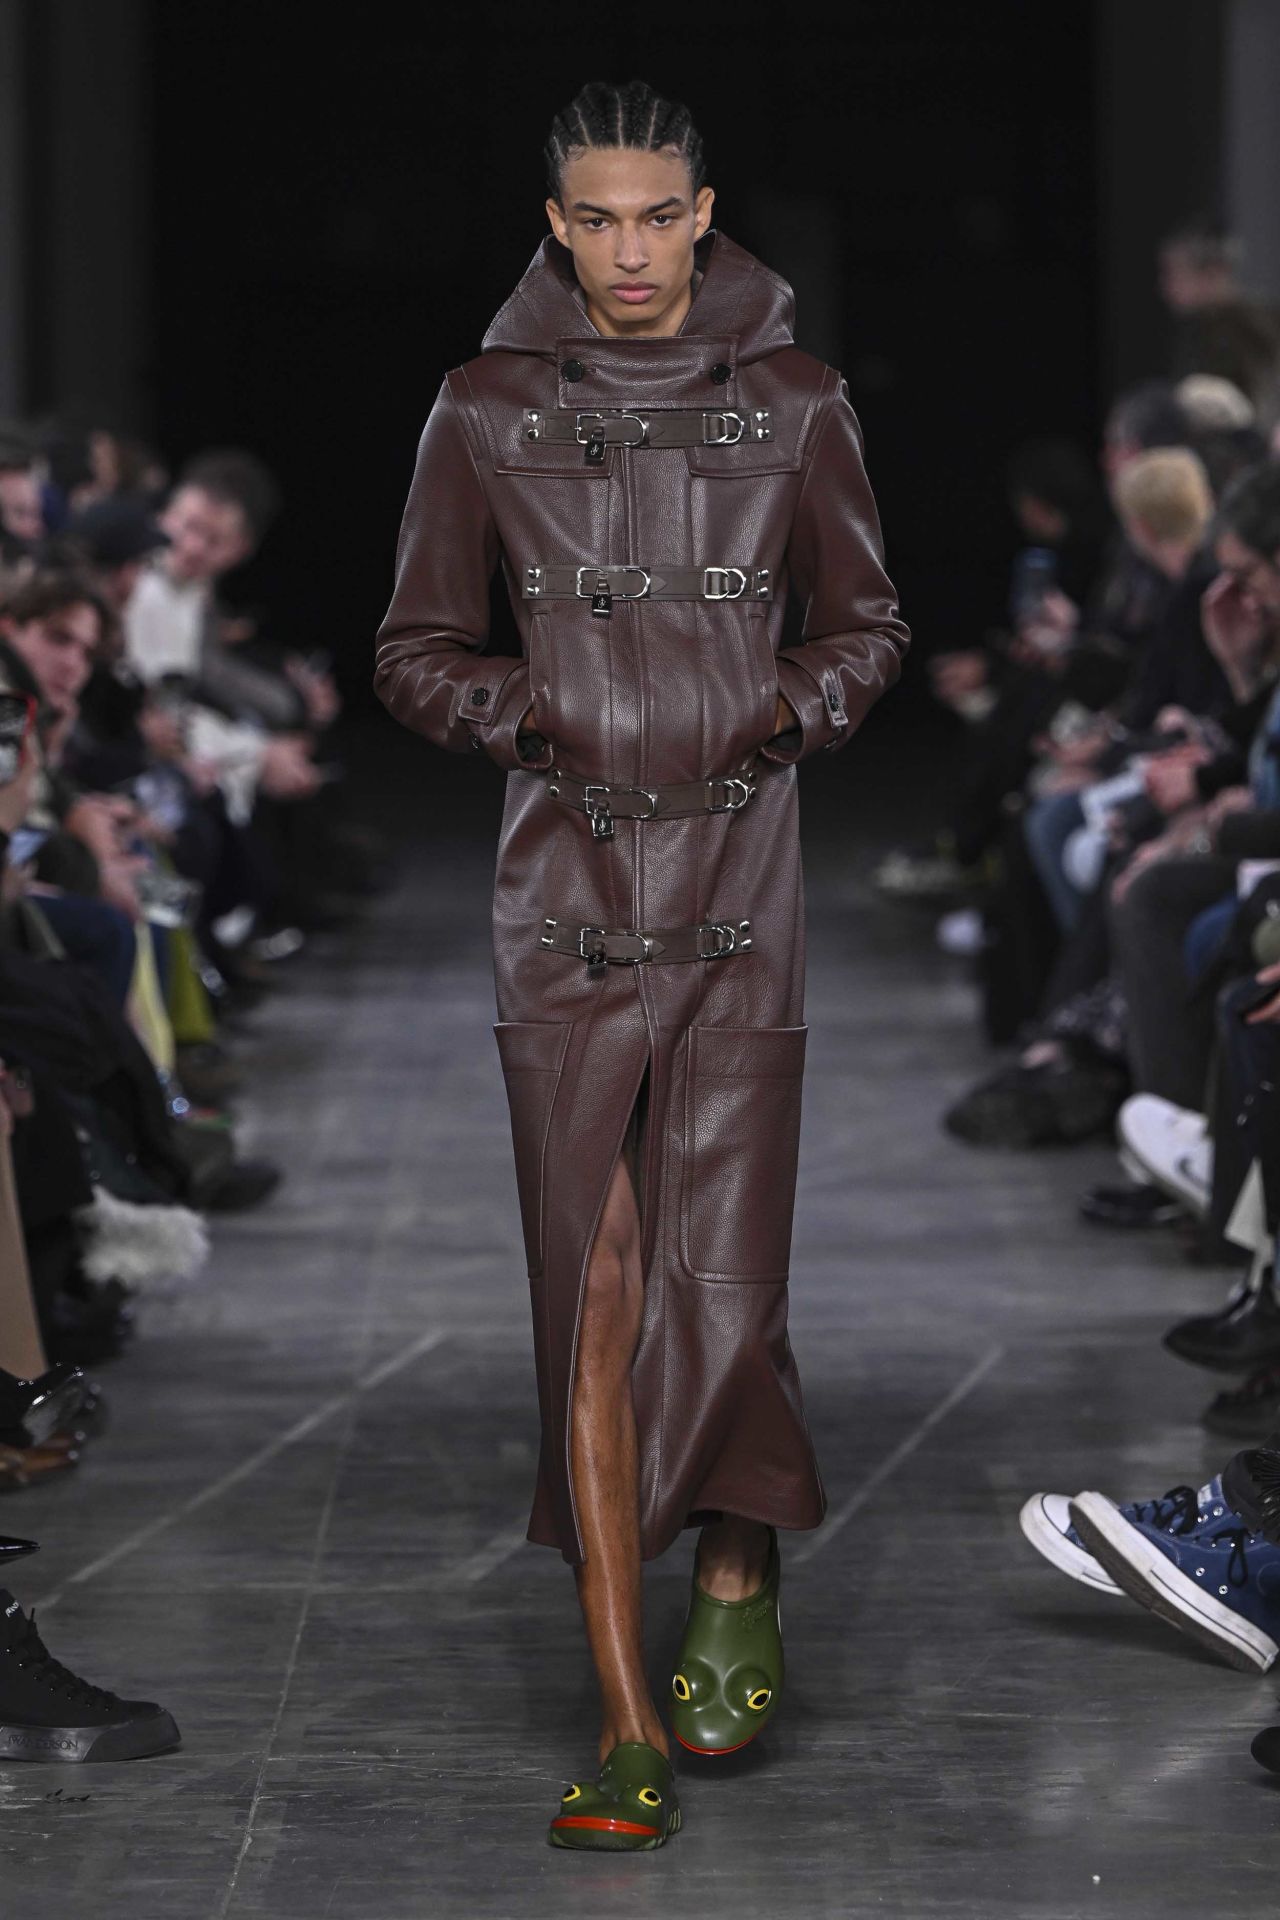 JW Anderson flaunts frog clogs at Milan Fashion Week | CNN